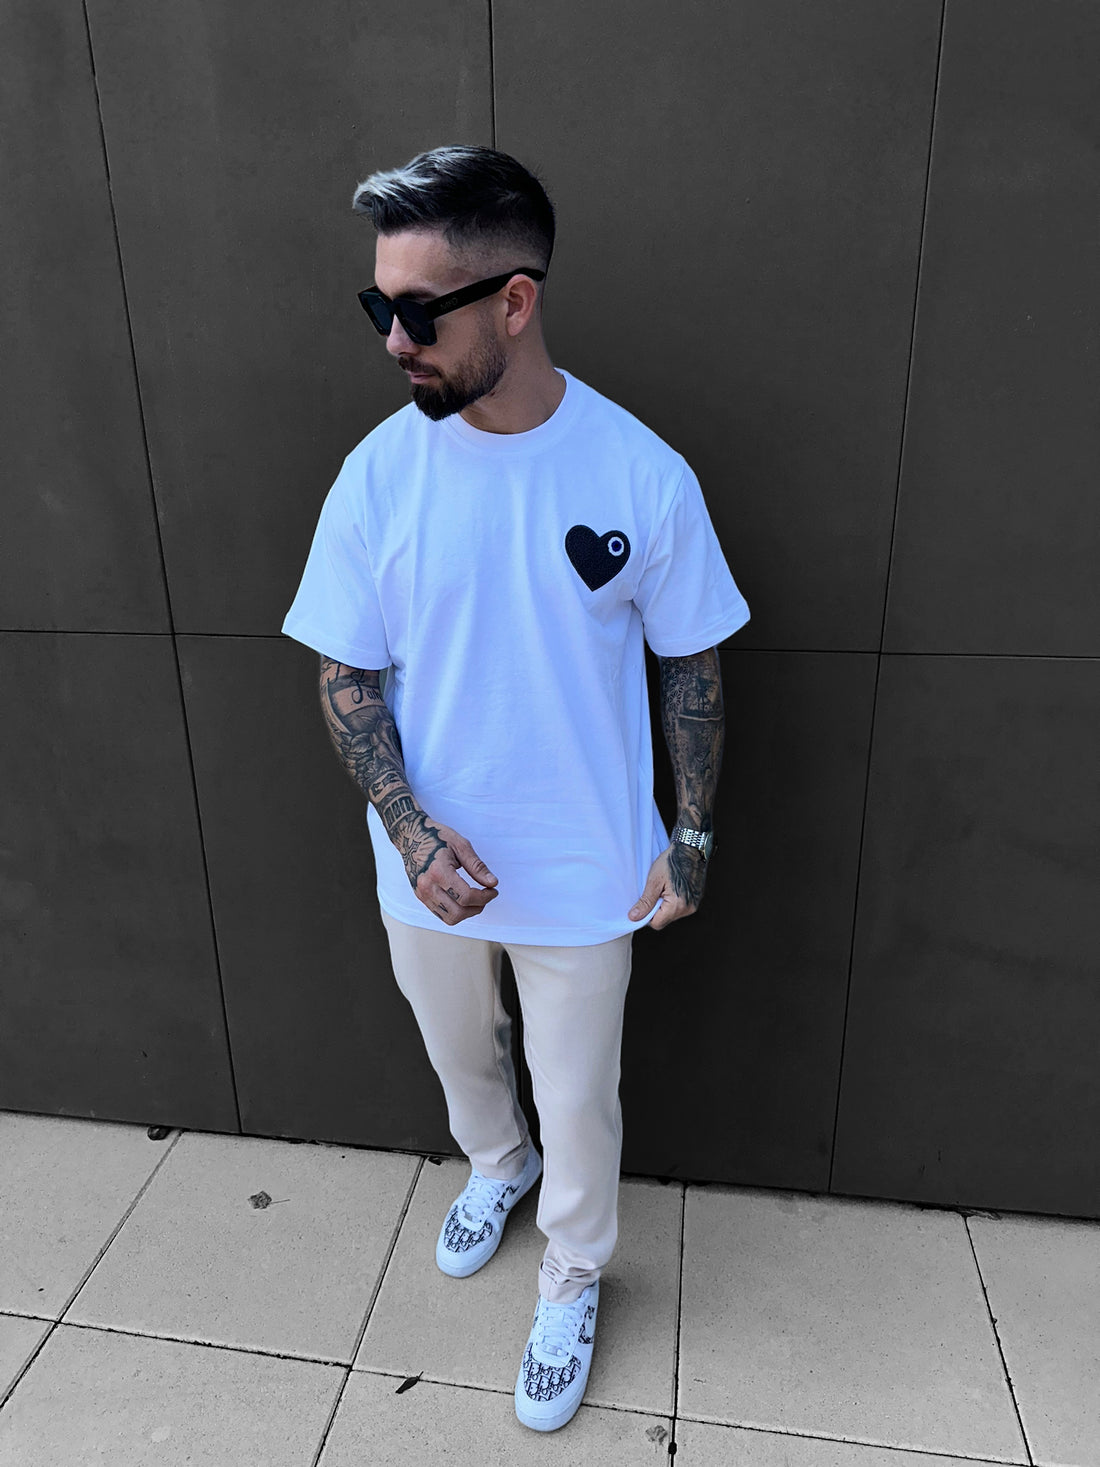 ADJ - T-shirt blanc coeur gris